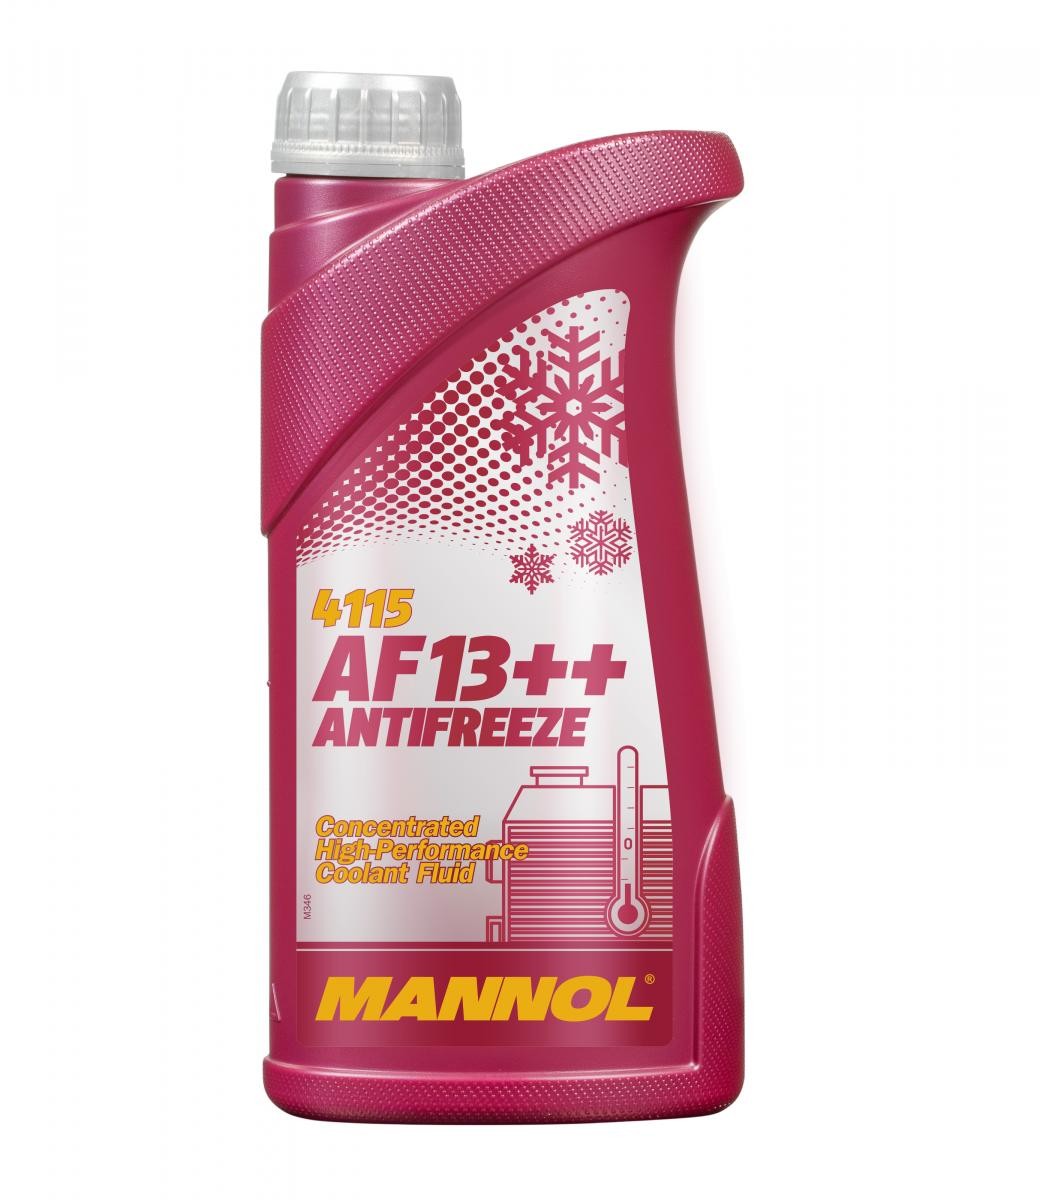 TRAXX STAR Kühlmittel G12 Rot, 1l, -38(50/50) MANNOL AF13++, High-performance MN4115-1